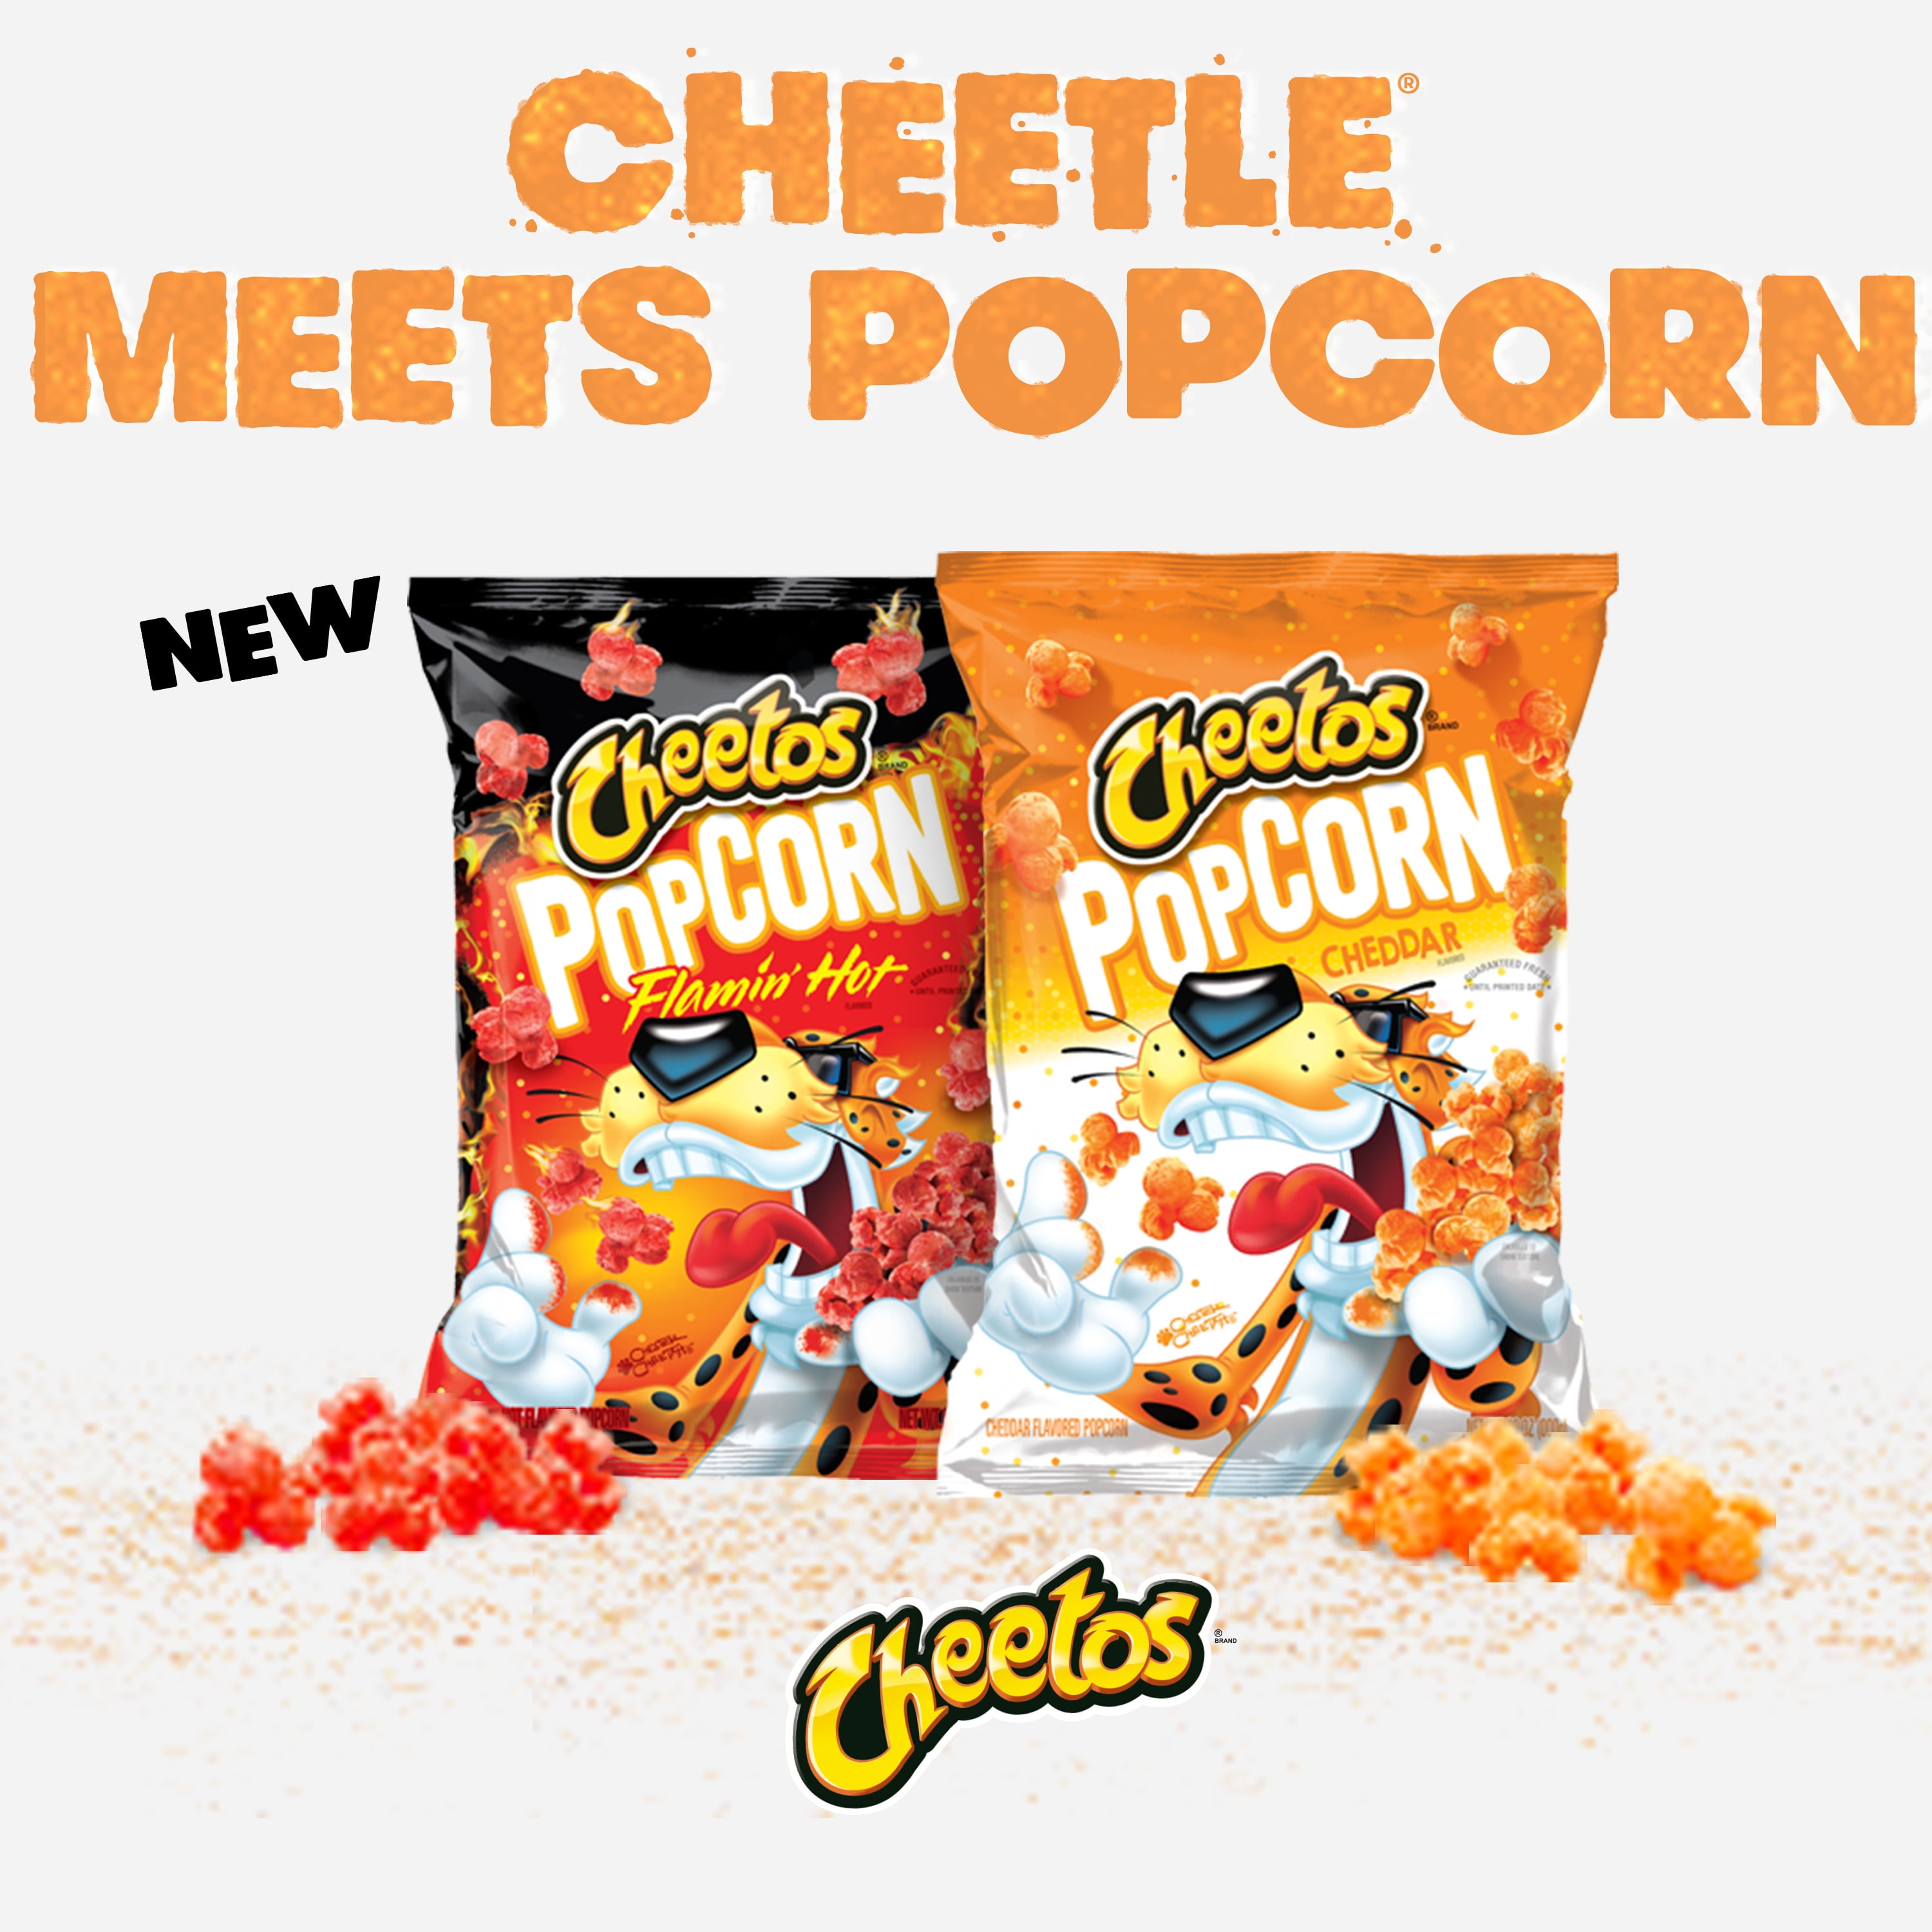 Cheetos Cheddar Cheese Flavored Popcorn, 7 oz - Gerbes Super Markets